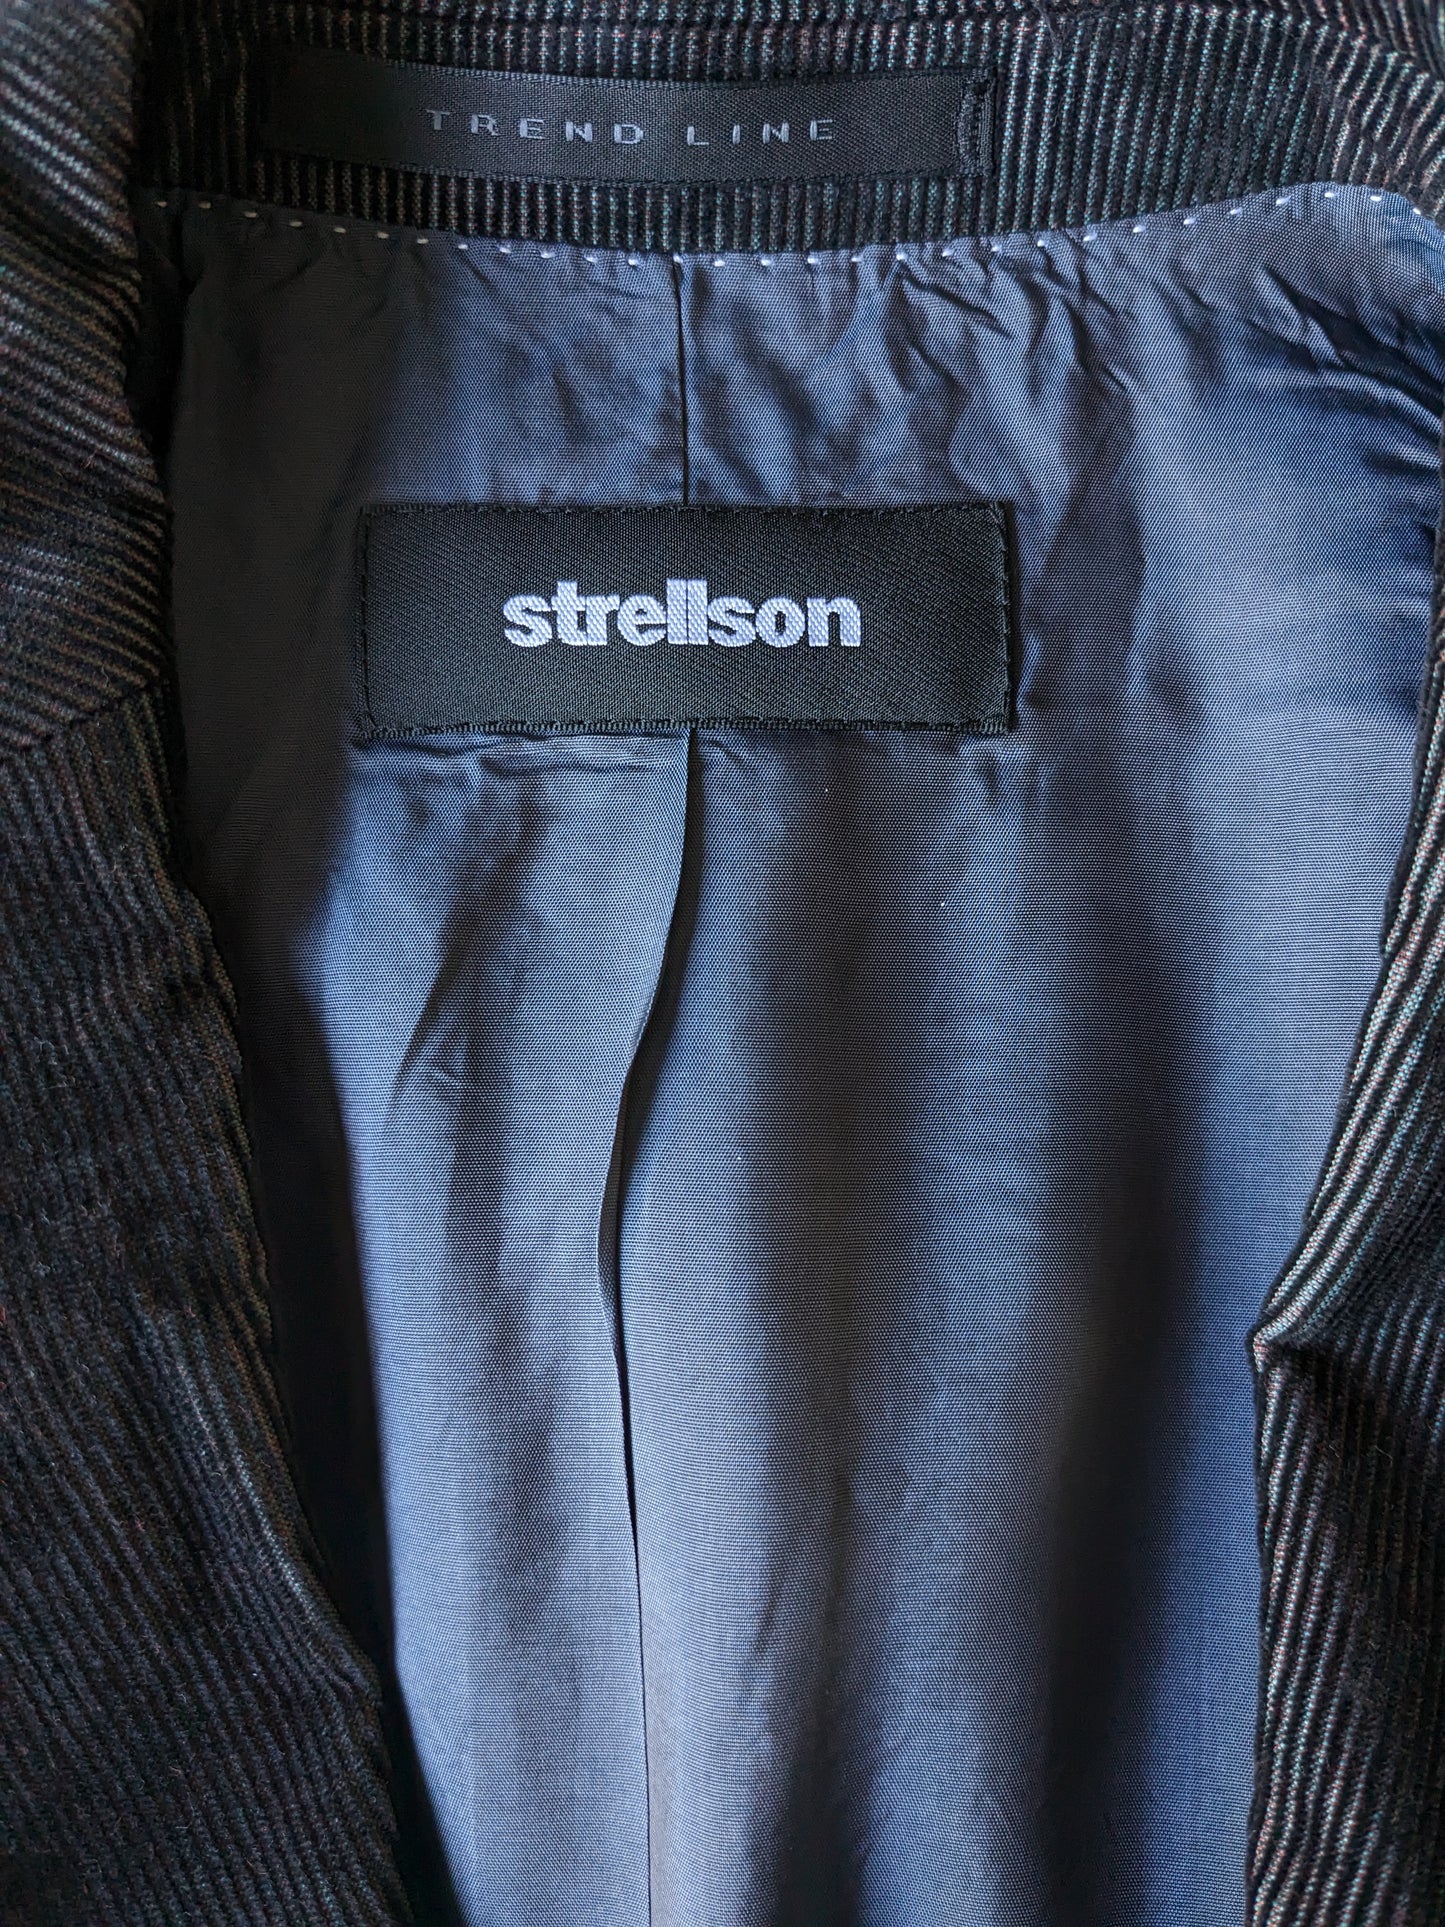 Strellson Trend Line Rib costume. Black with green/purple metallic shine. Size 46 / s